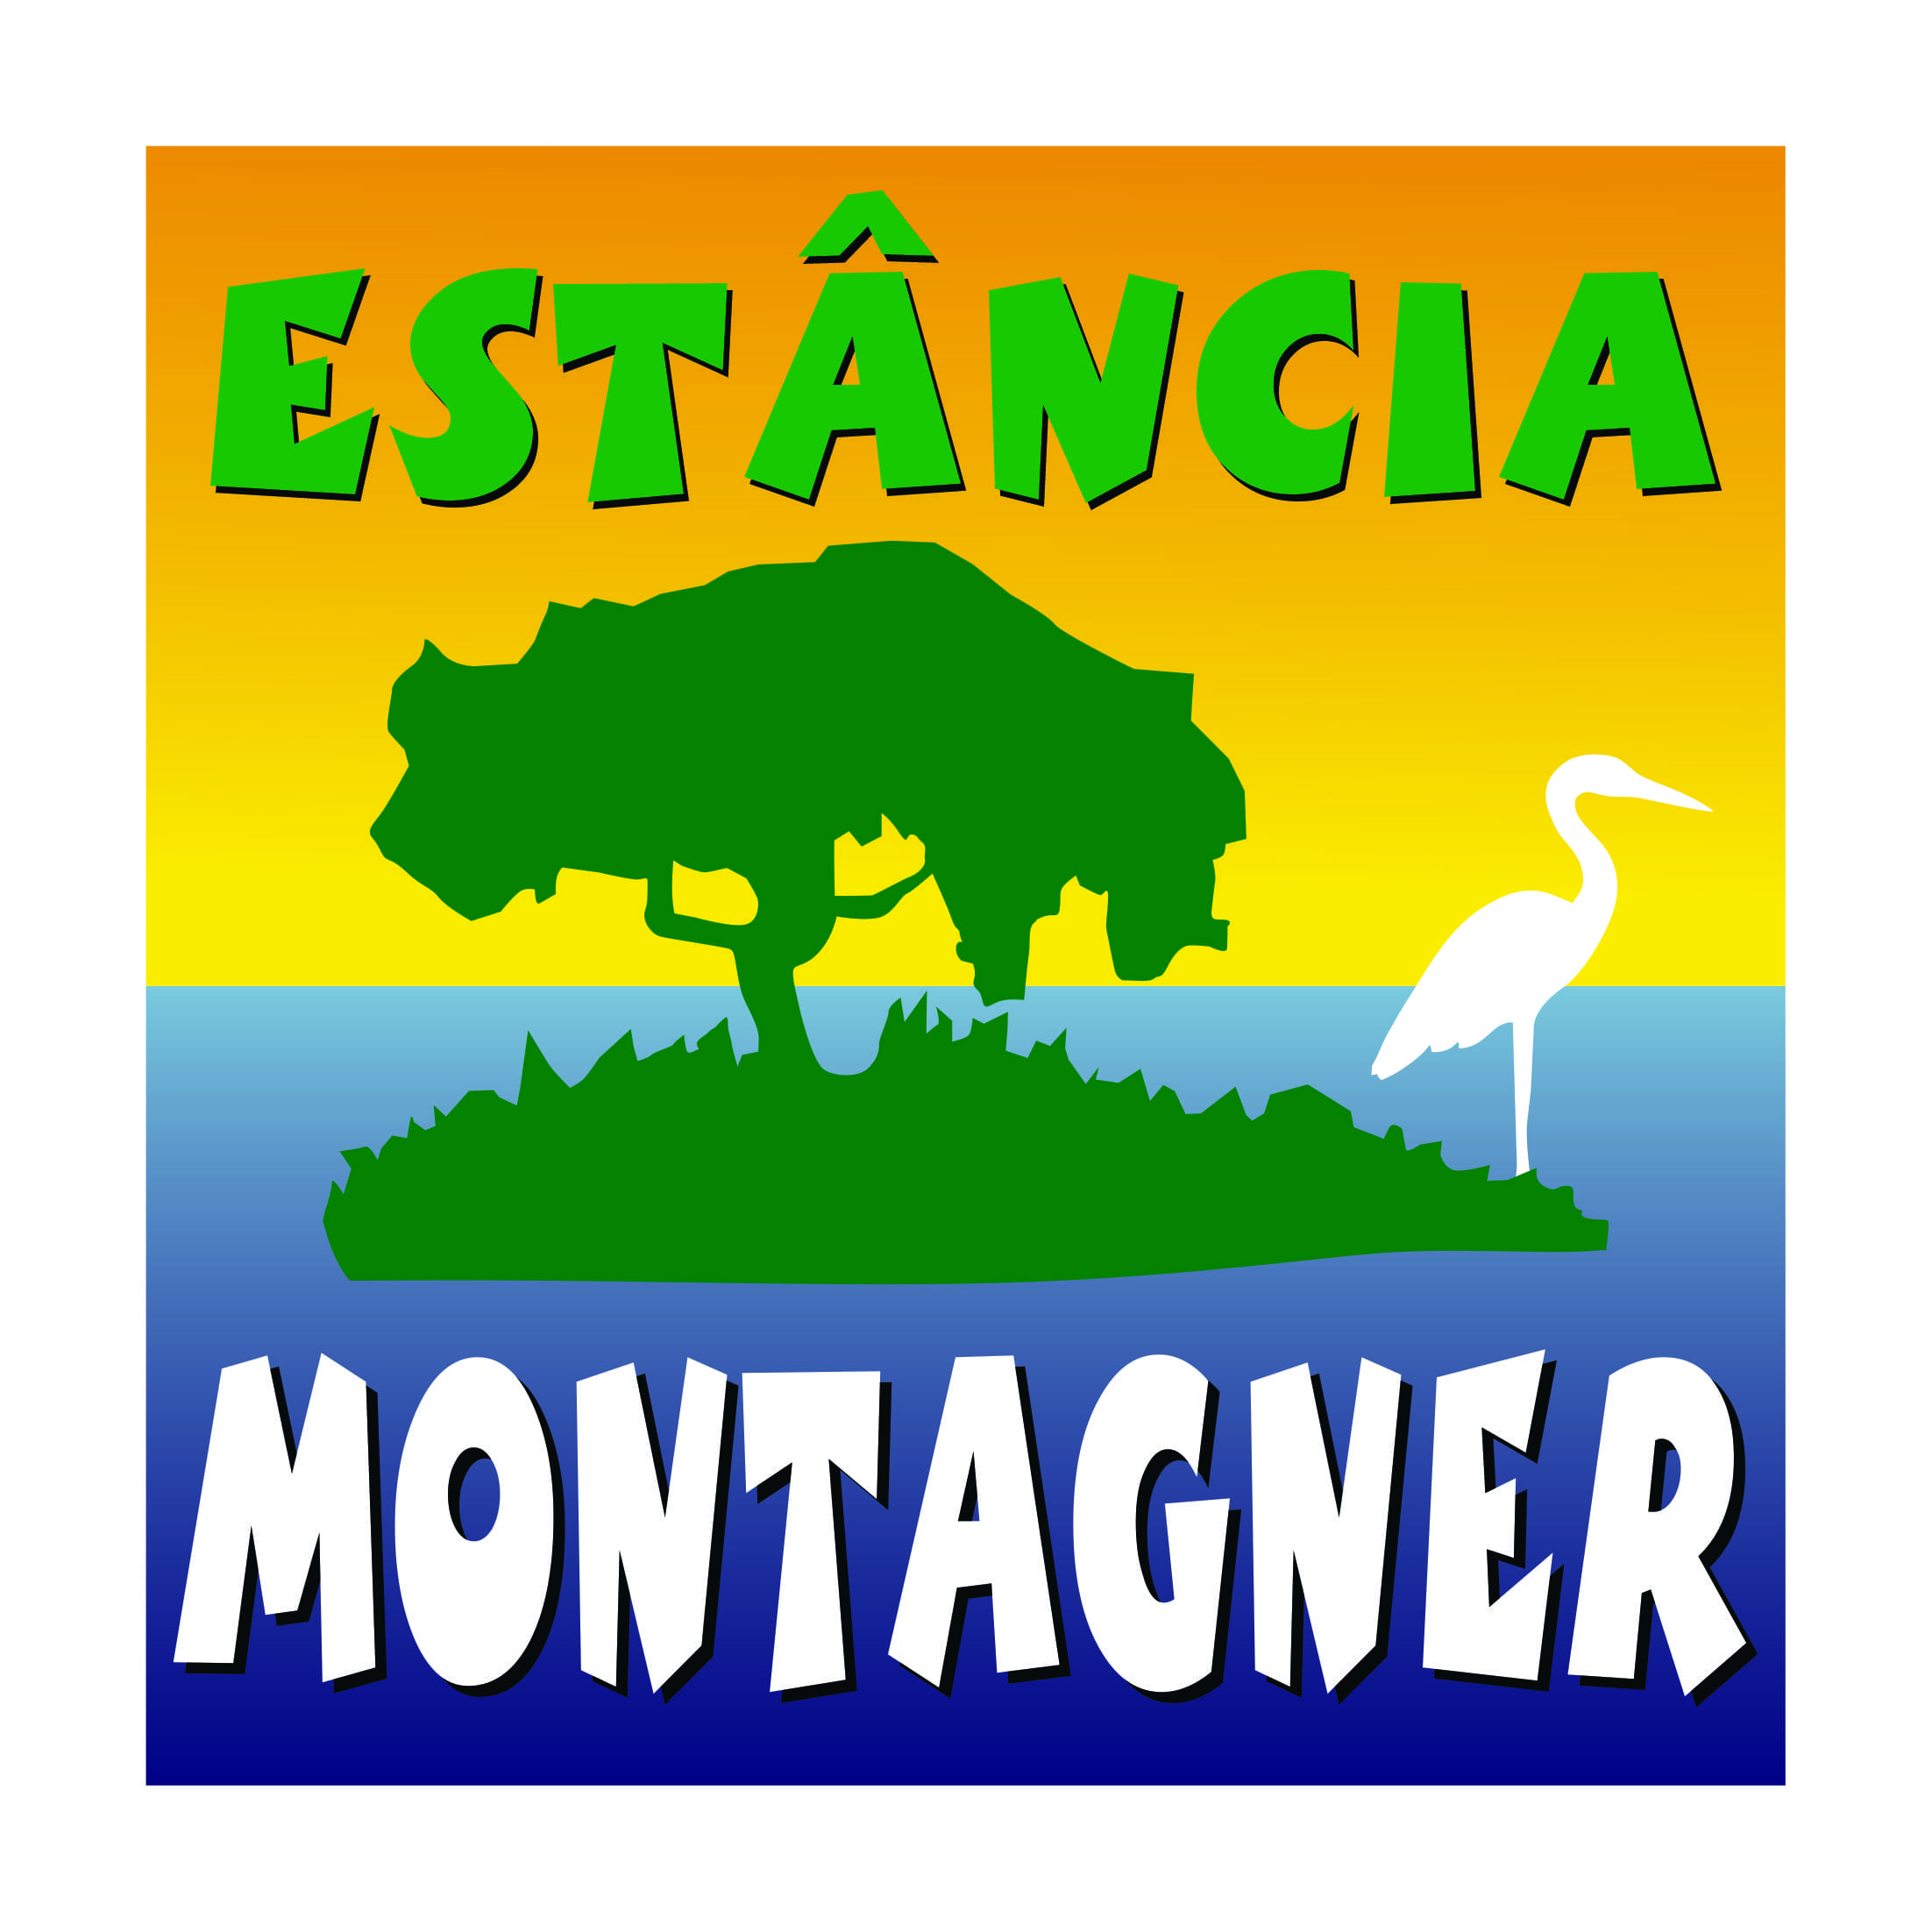 (c) Estanciamontagner.com.br